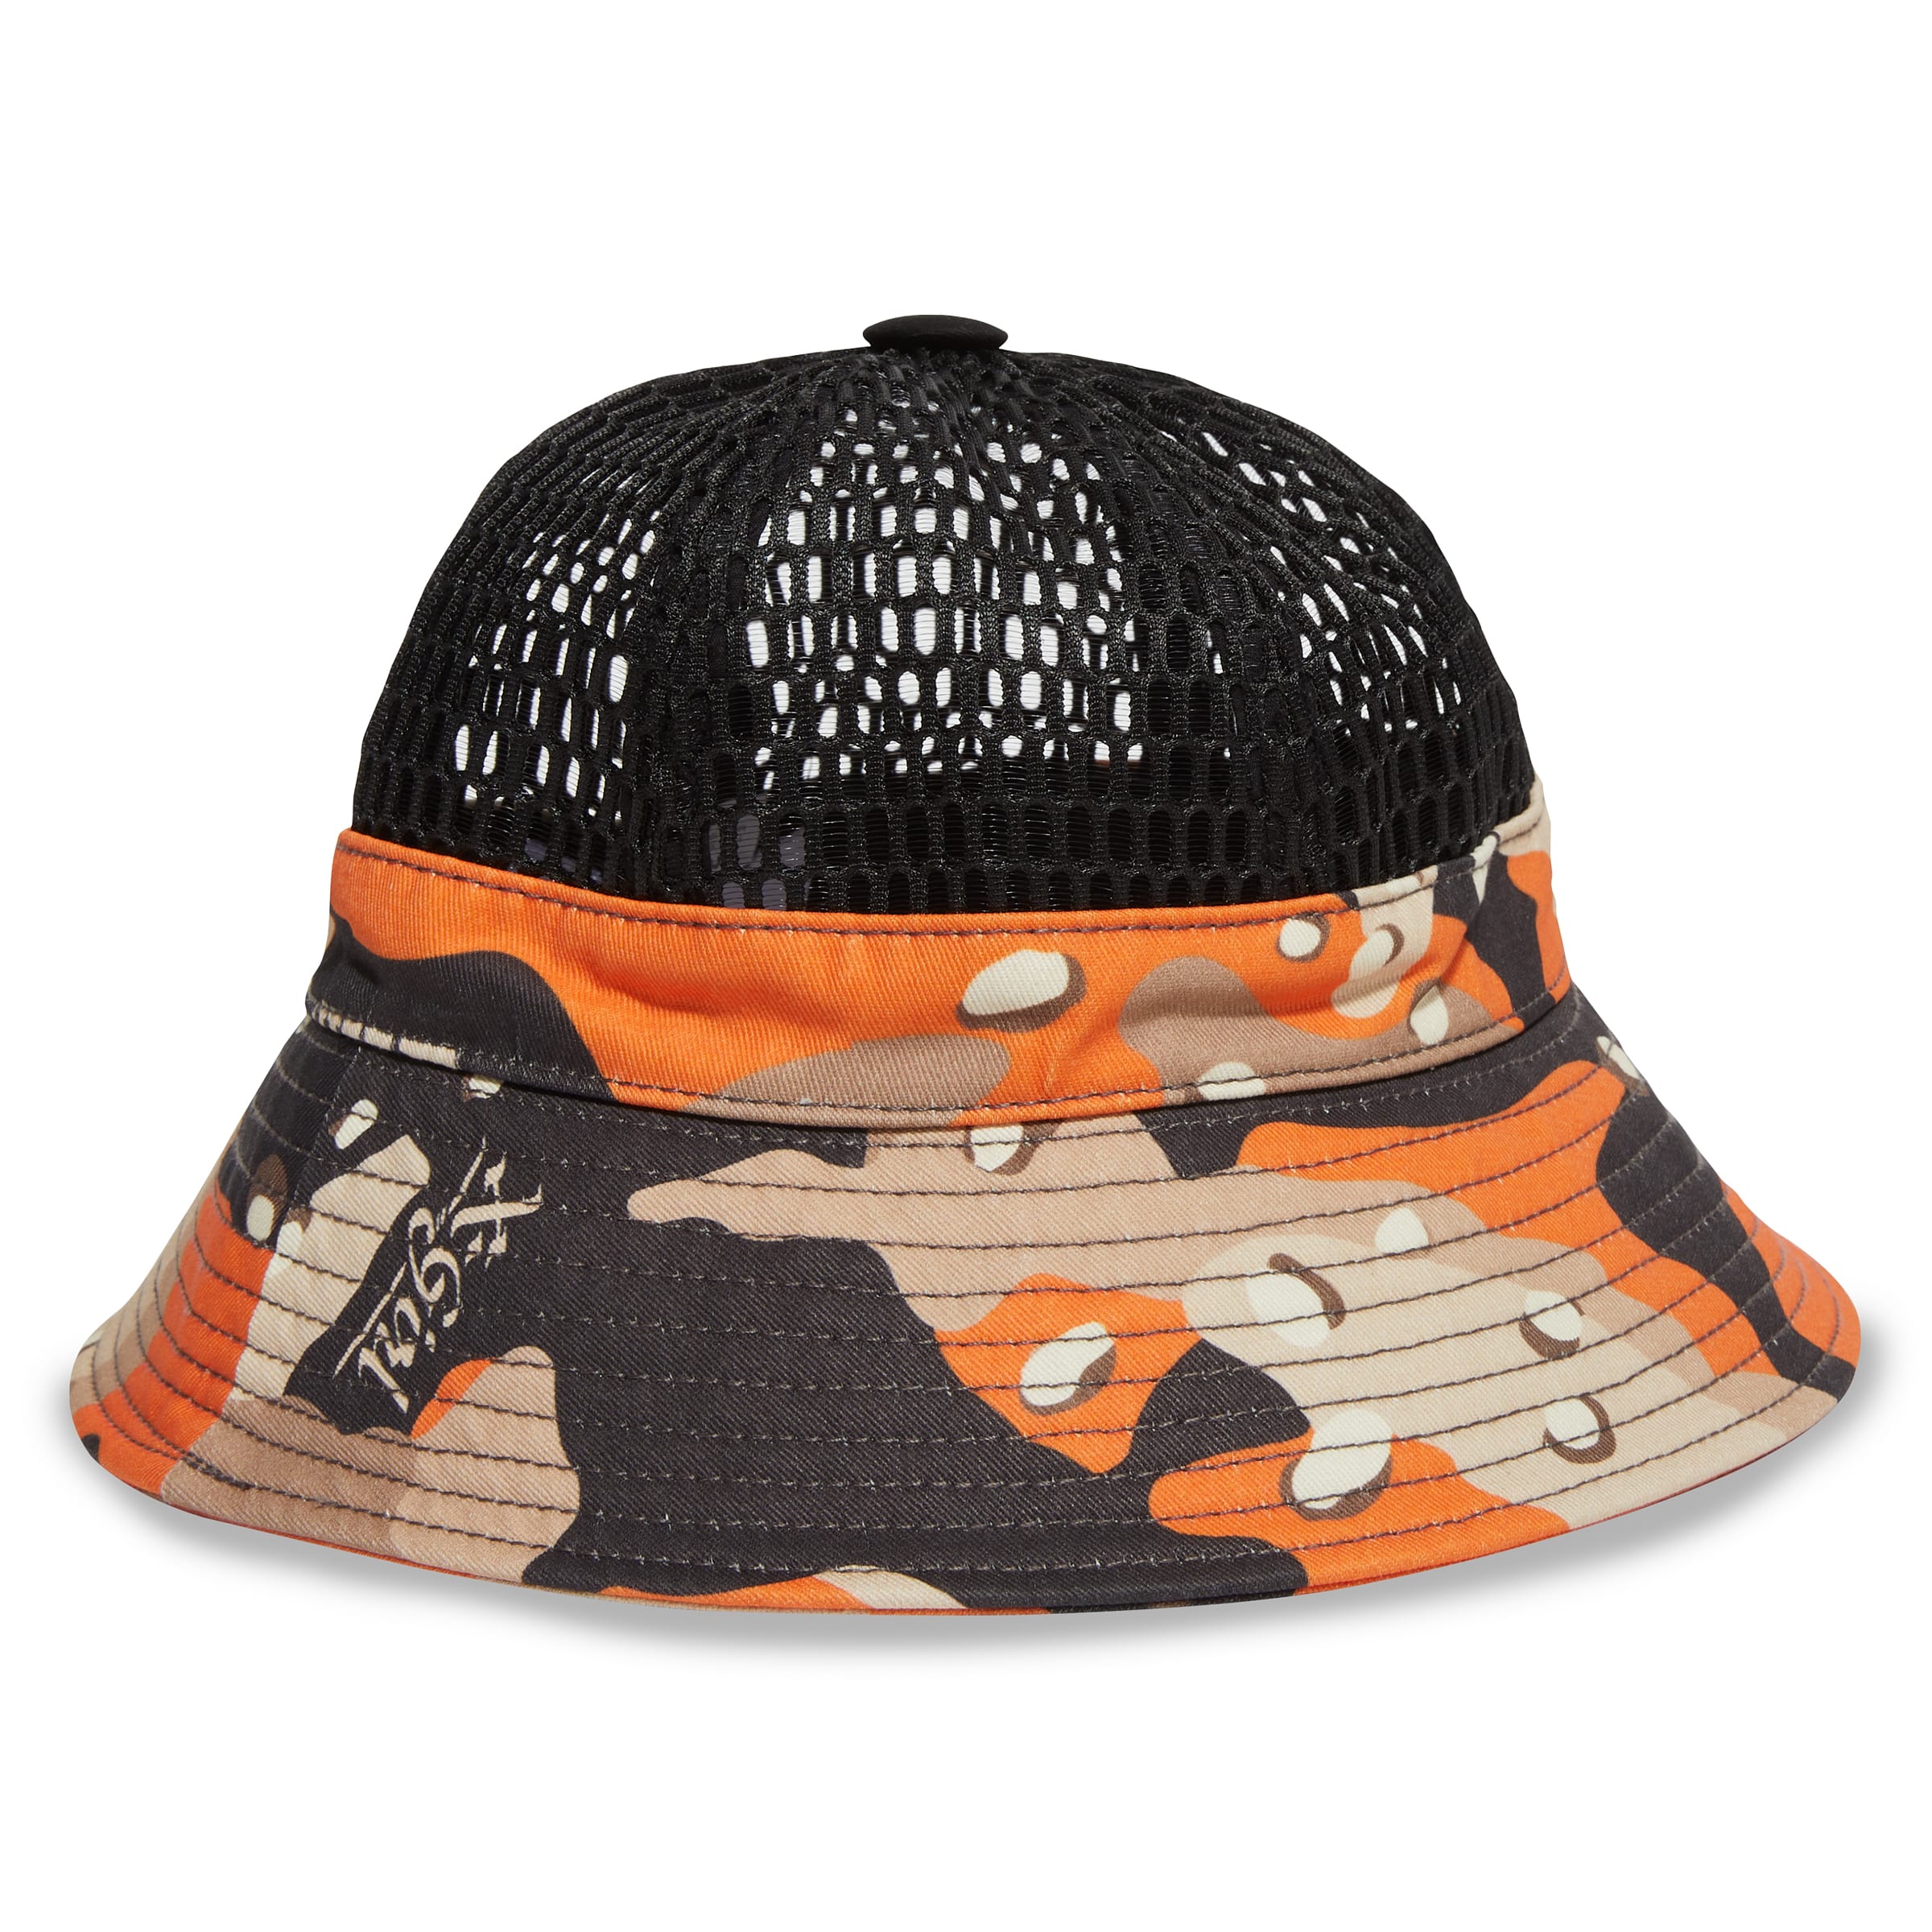 Huf Don Dada Mesh Bucket Hat in Camo - Size S/M